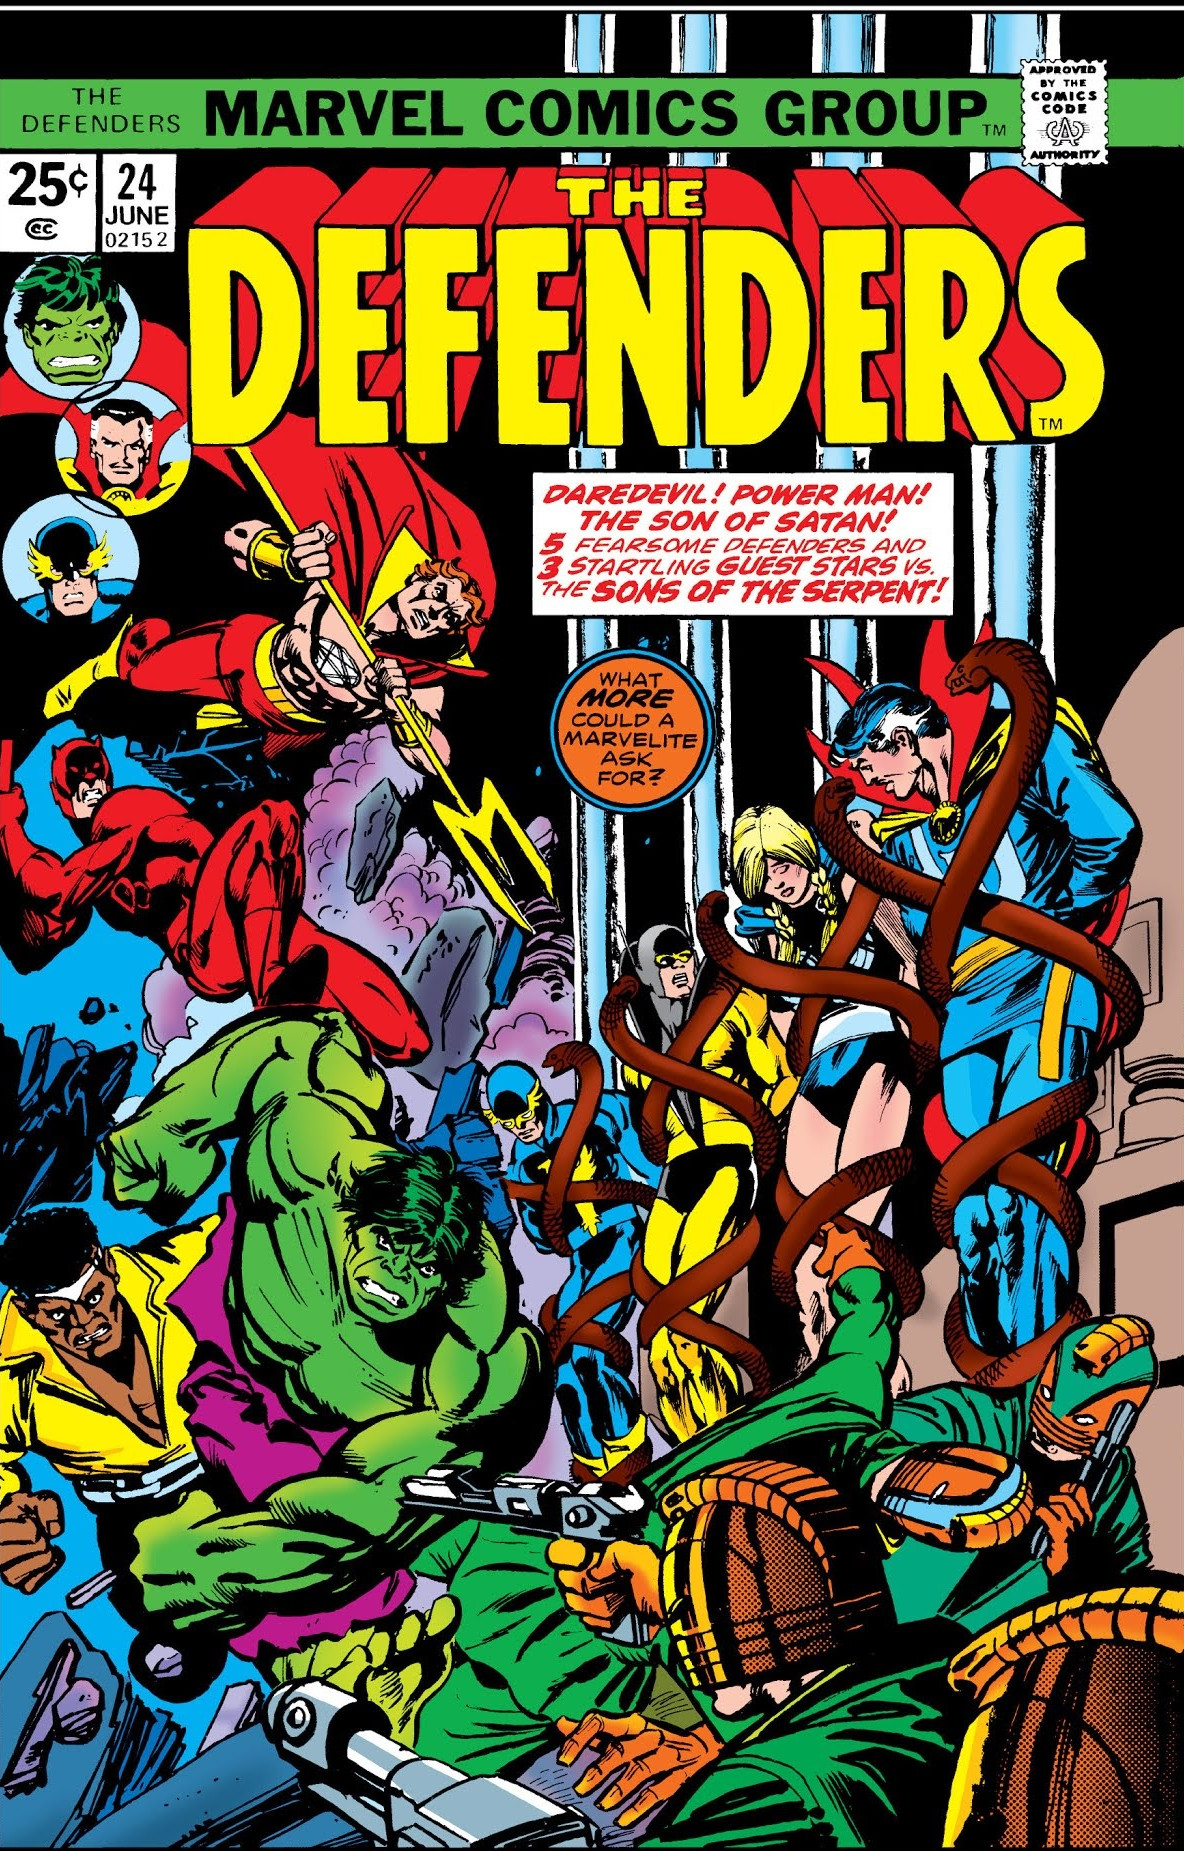 Power defenders. Sons of the Serpent Марвел комикс. Защитники Марвел комикс. Marvel комиксы журнал. Marvel 1970s.